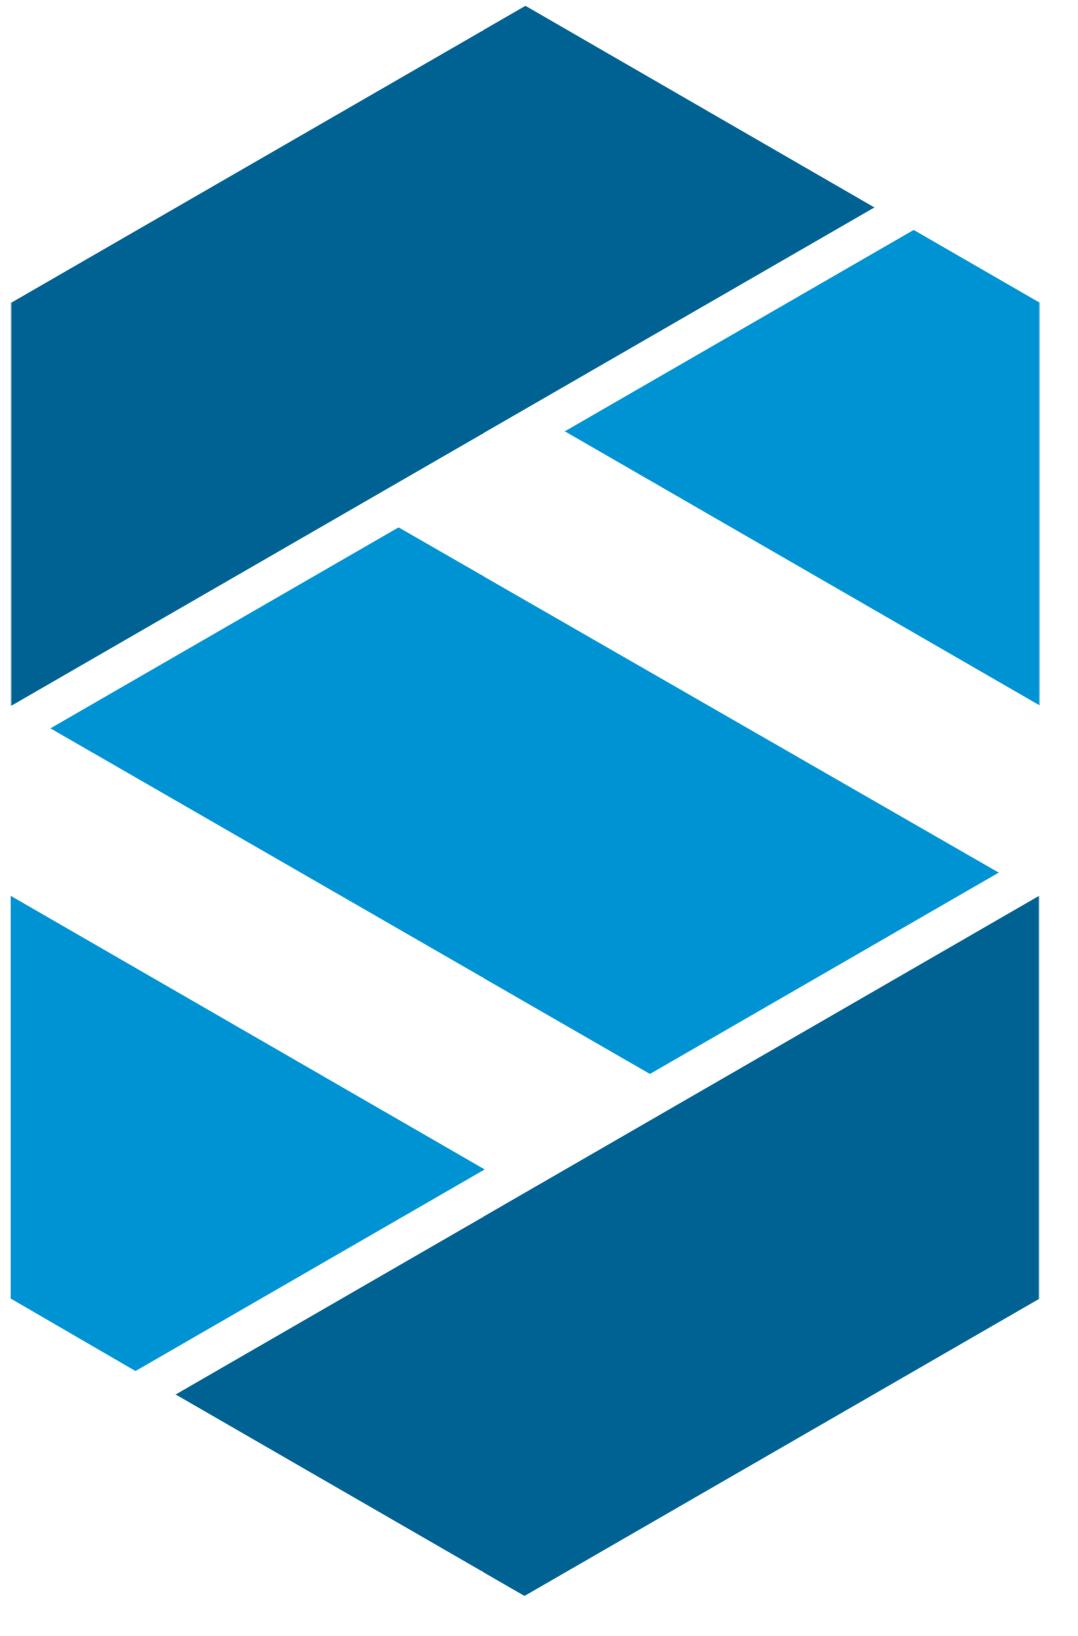 Sewsystems logo